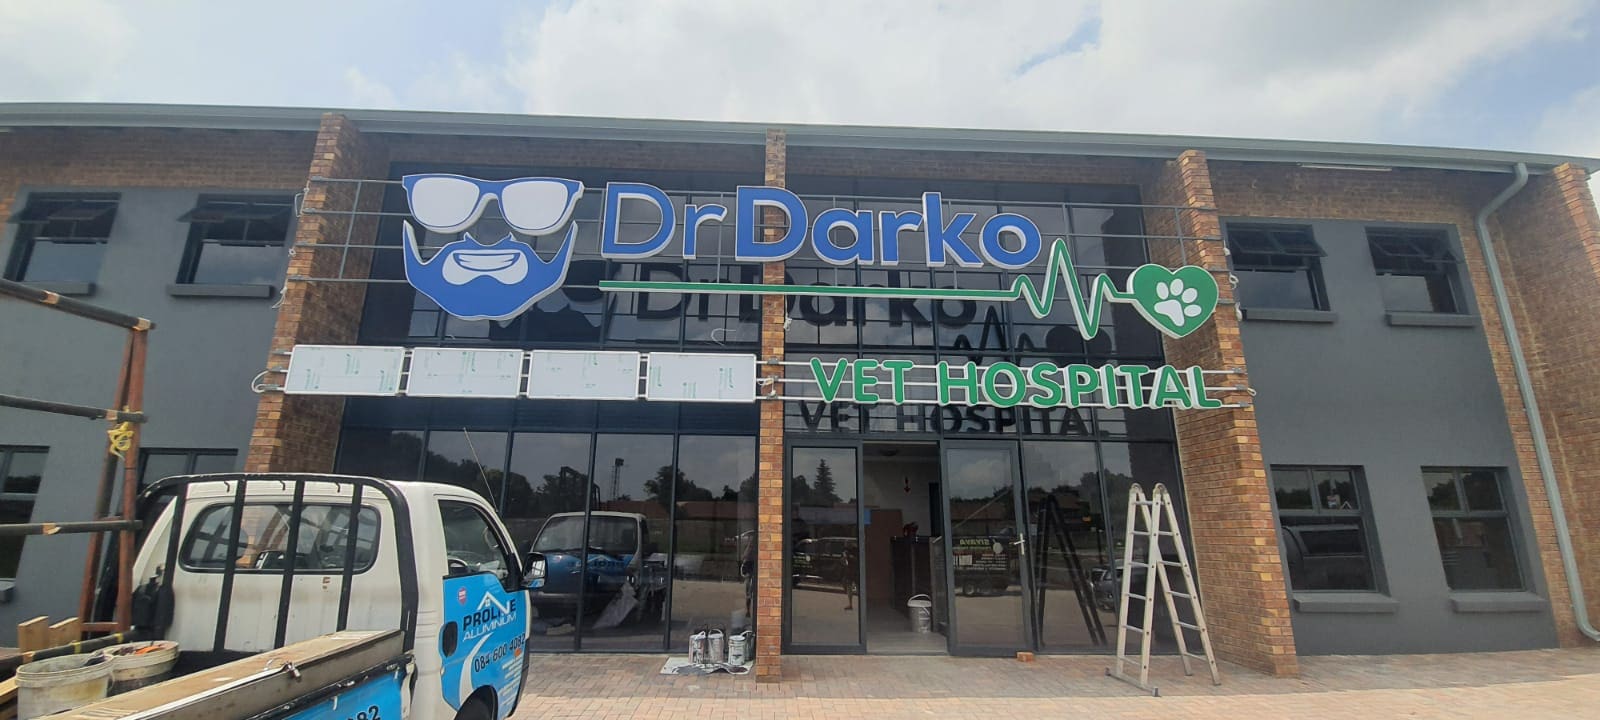 Dr Darko Vet Hospital Sign